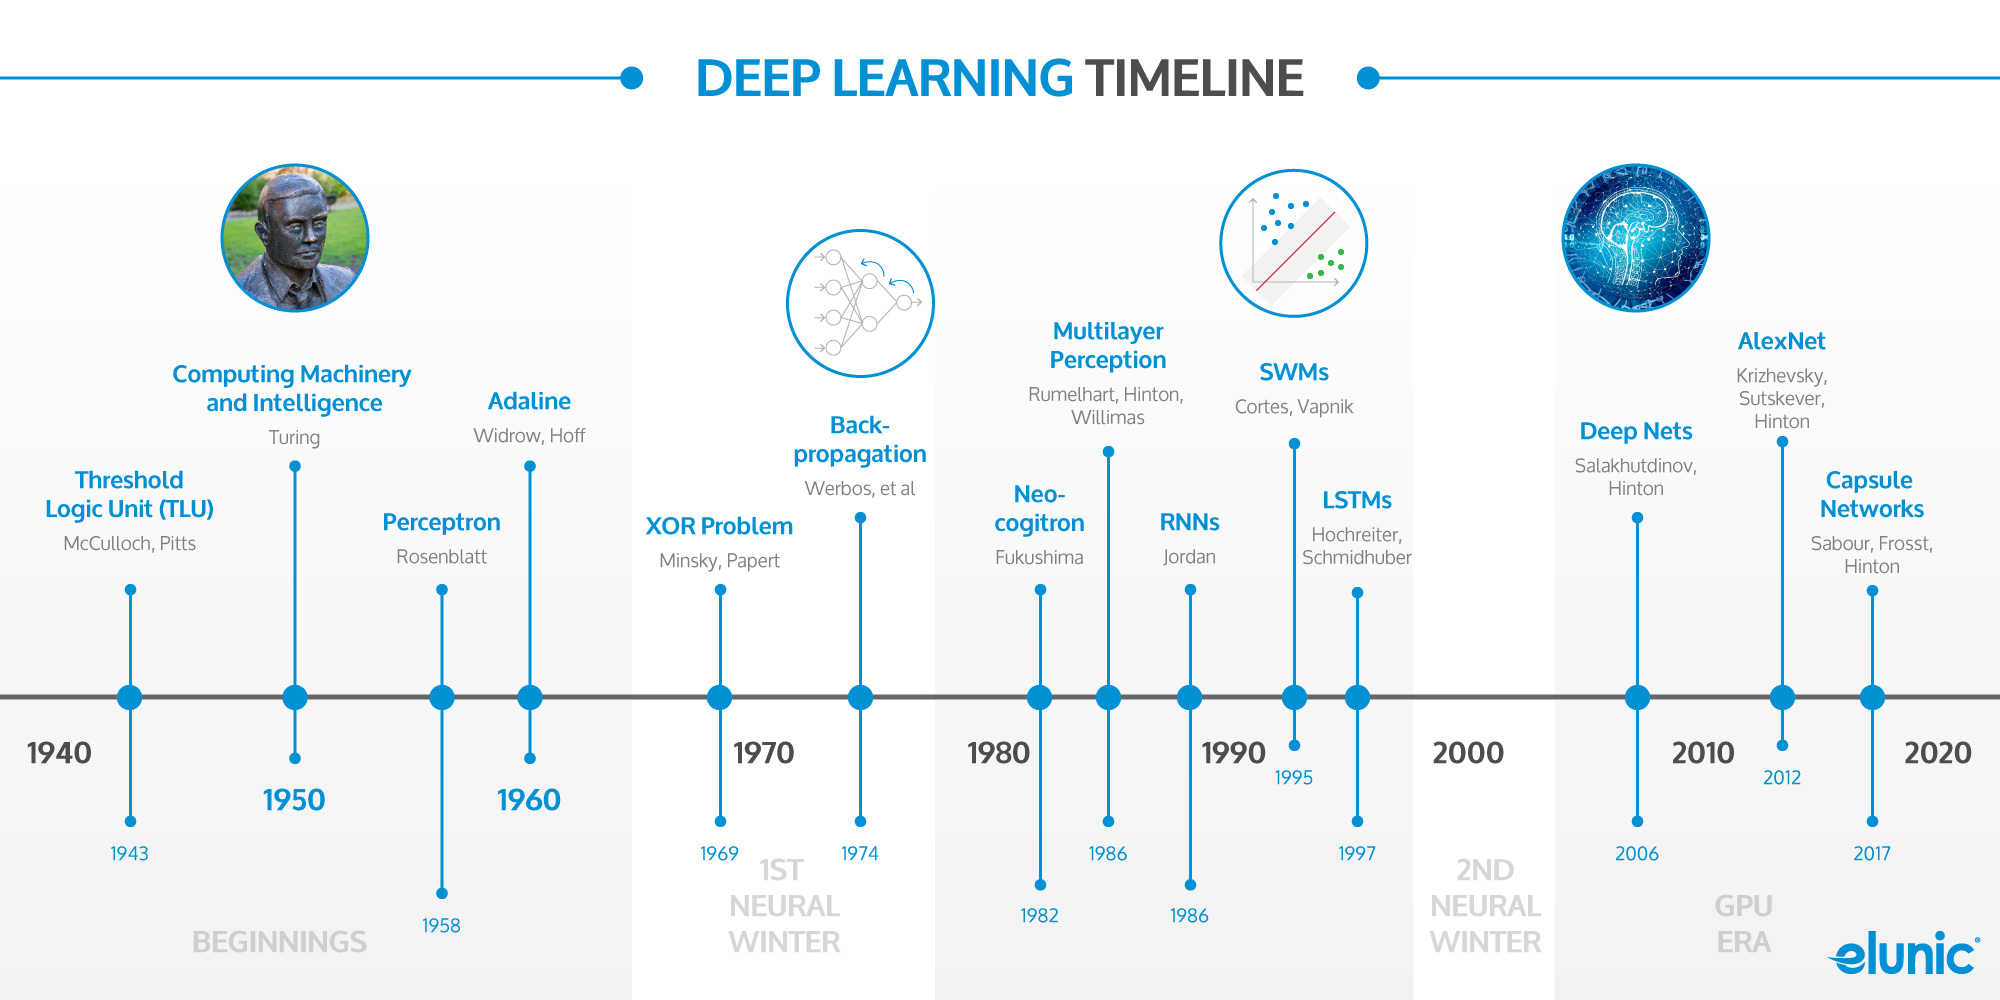 Deep Learning Timeline